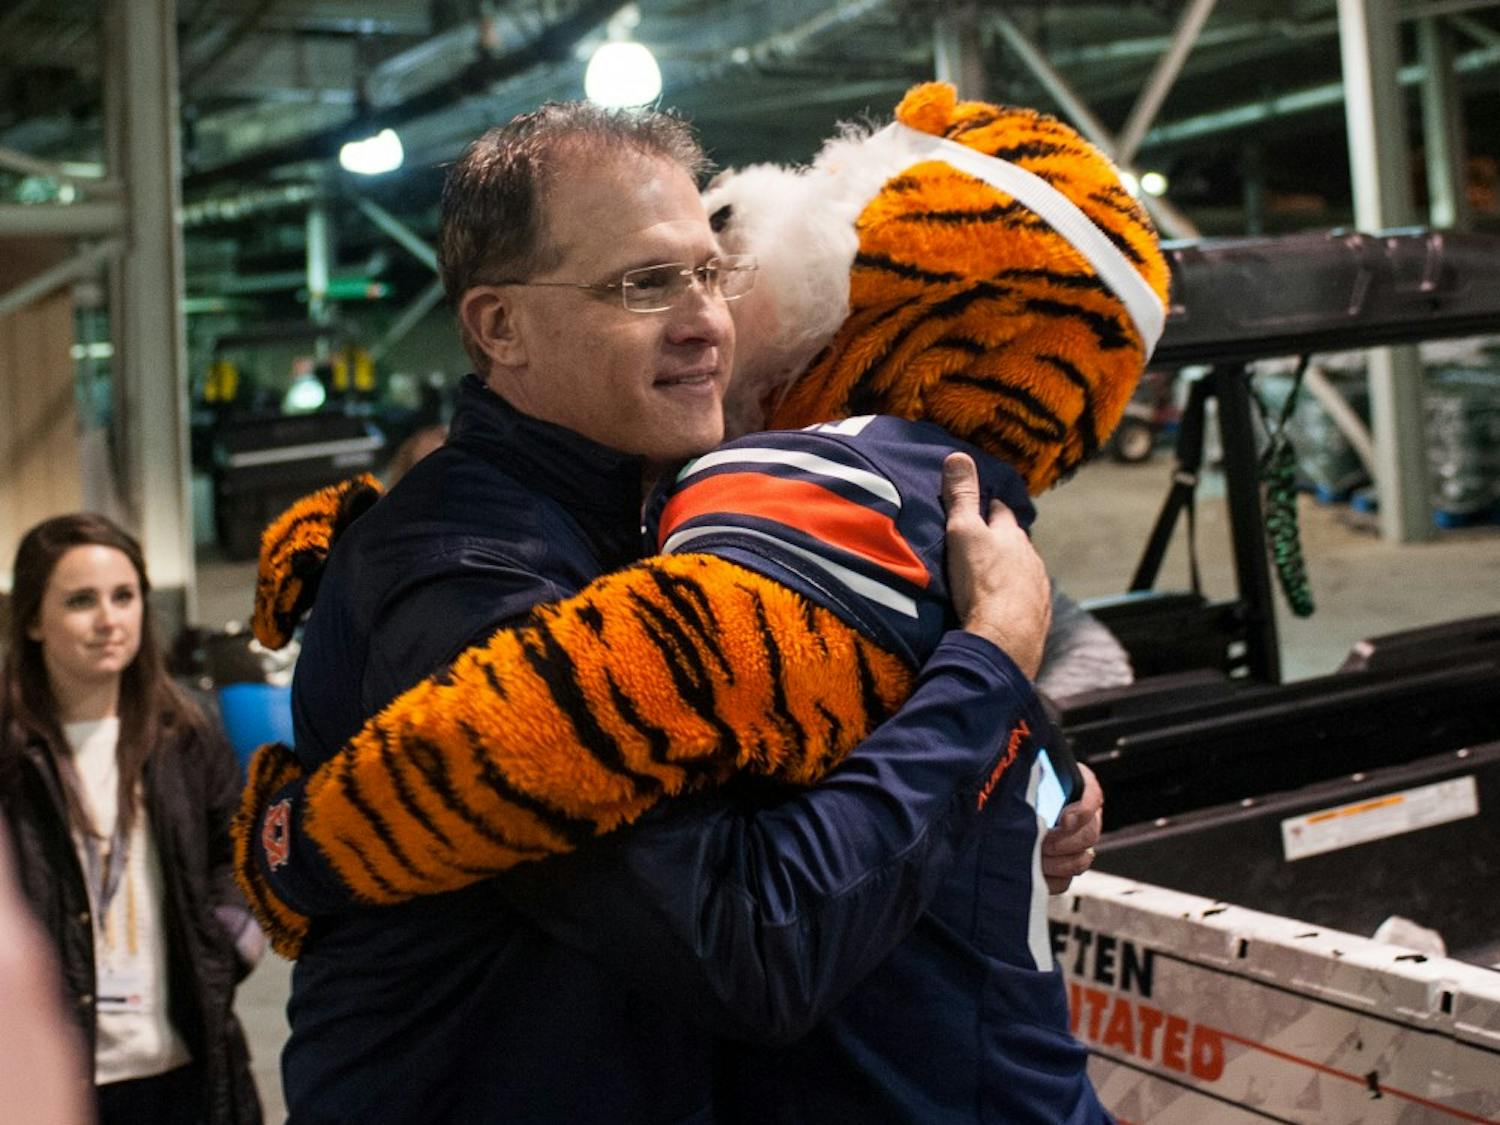 Aubie gives head coach Gus Malzahn a hug after the game. Auburn vs Alabama on Saturday, Nov. 25 in Auburn, Ala.